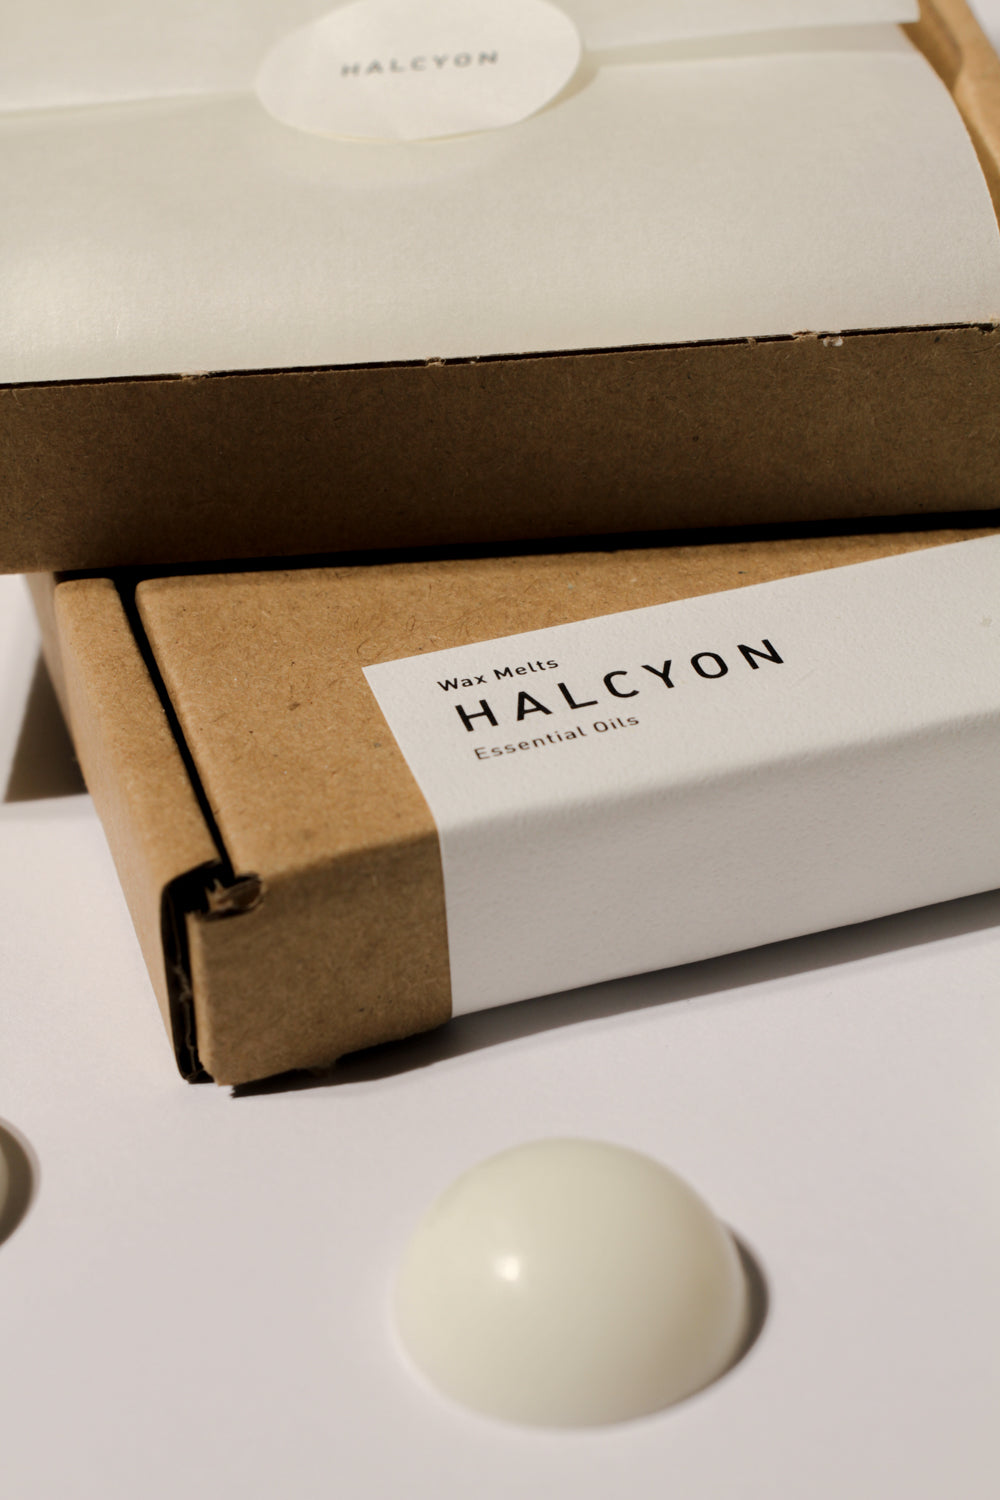 Essential Oil wax melts - Halcyon wax melts in kraft eco packaging